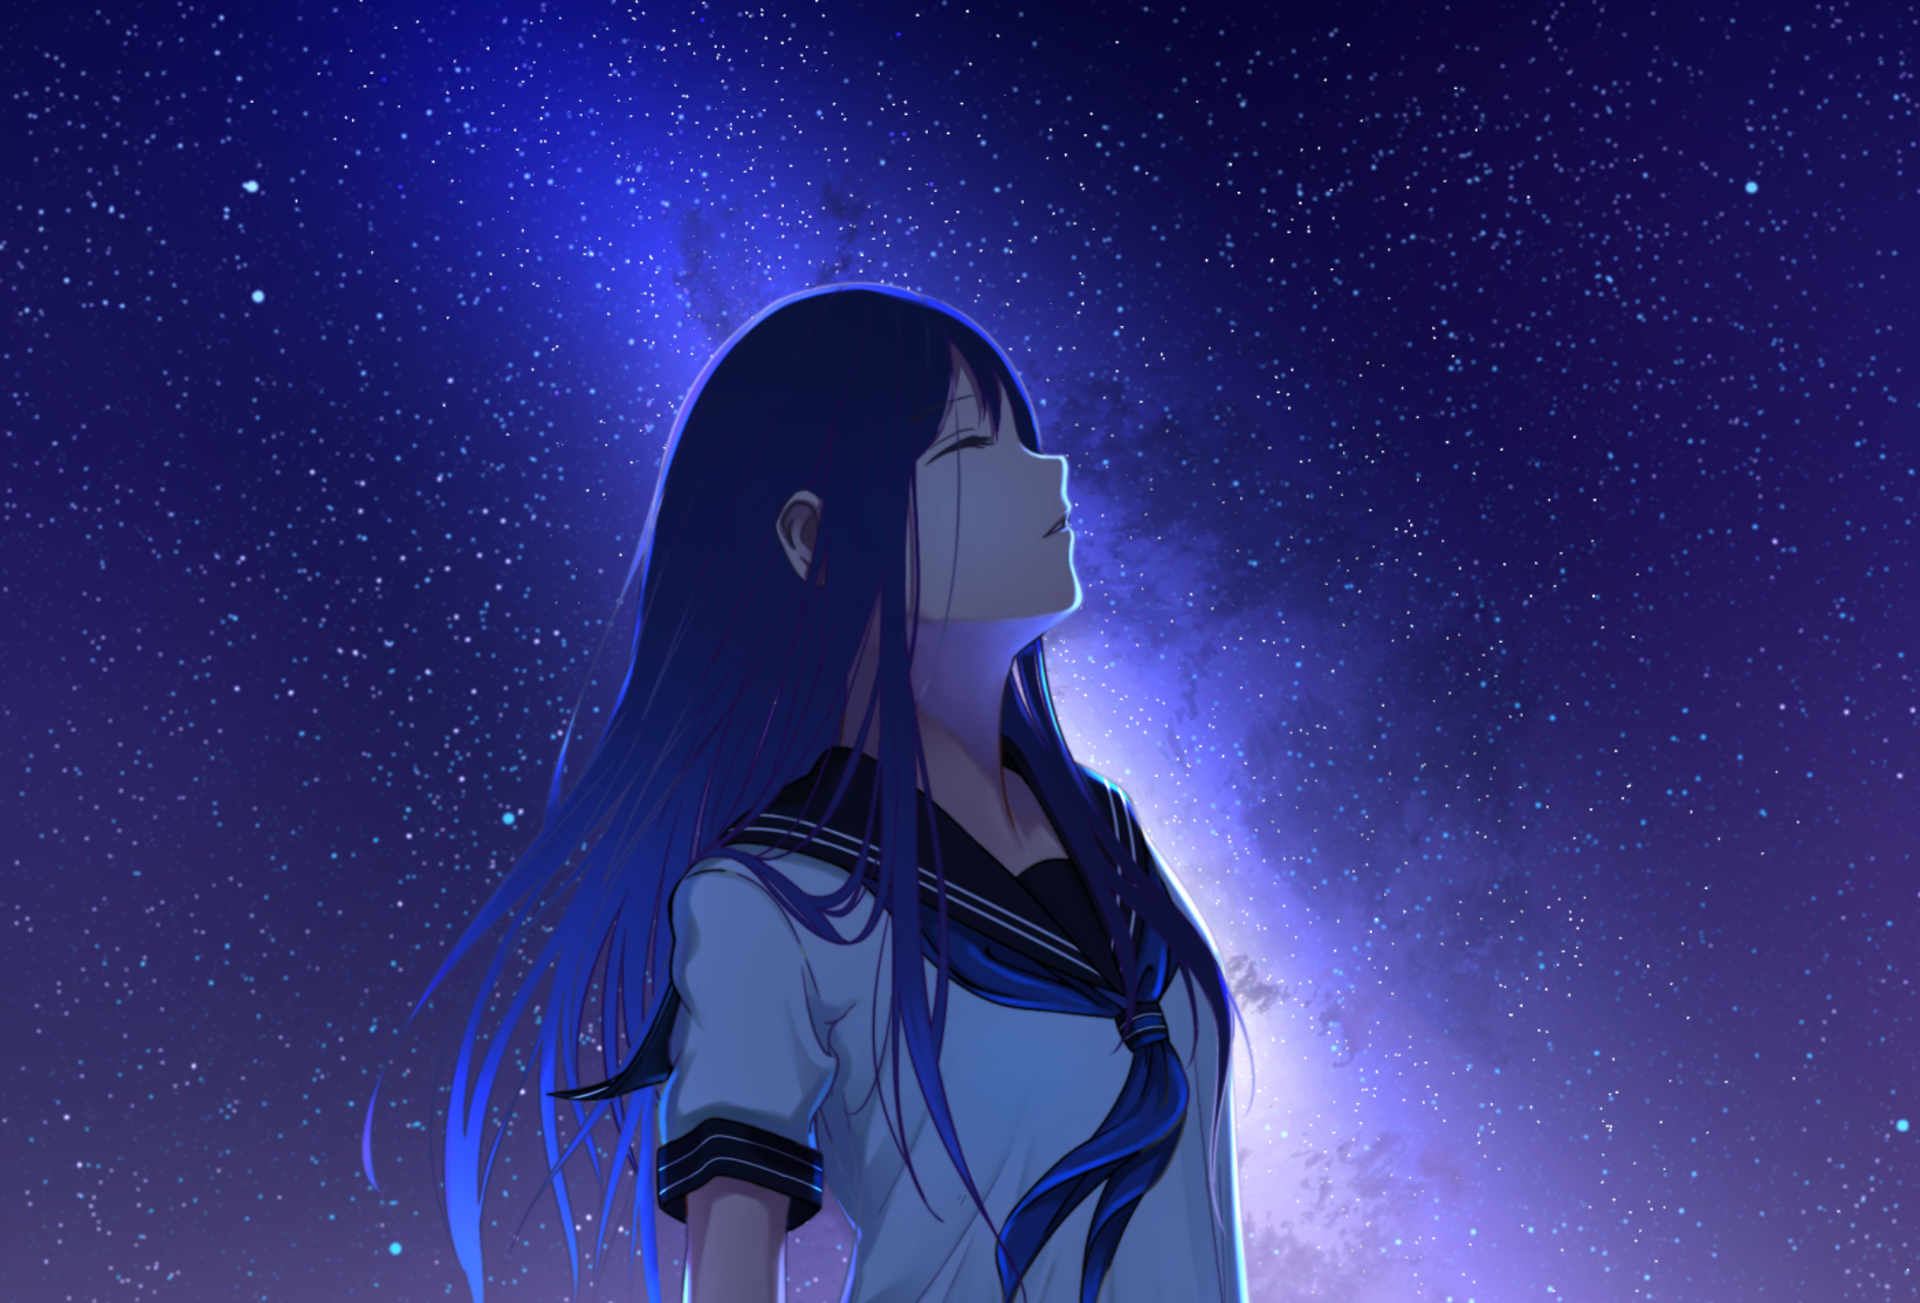 your name Anime Stars Sky Horizon Comet Anime boy HD Wallpapers   Desktop and Mobile Images  Photos